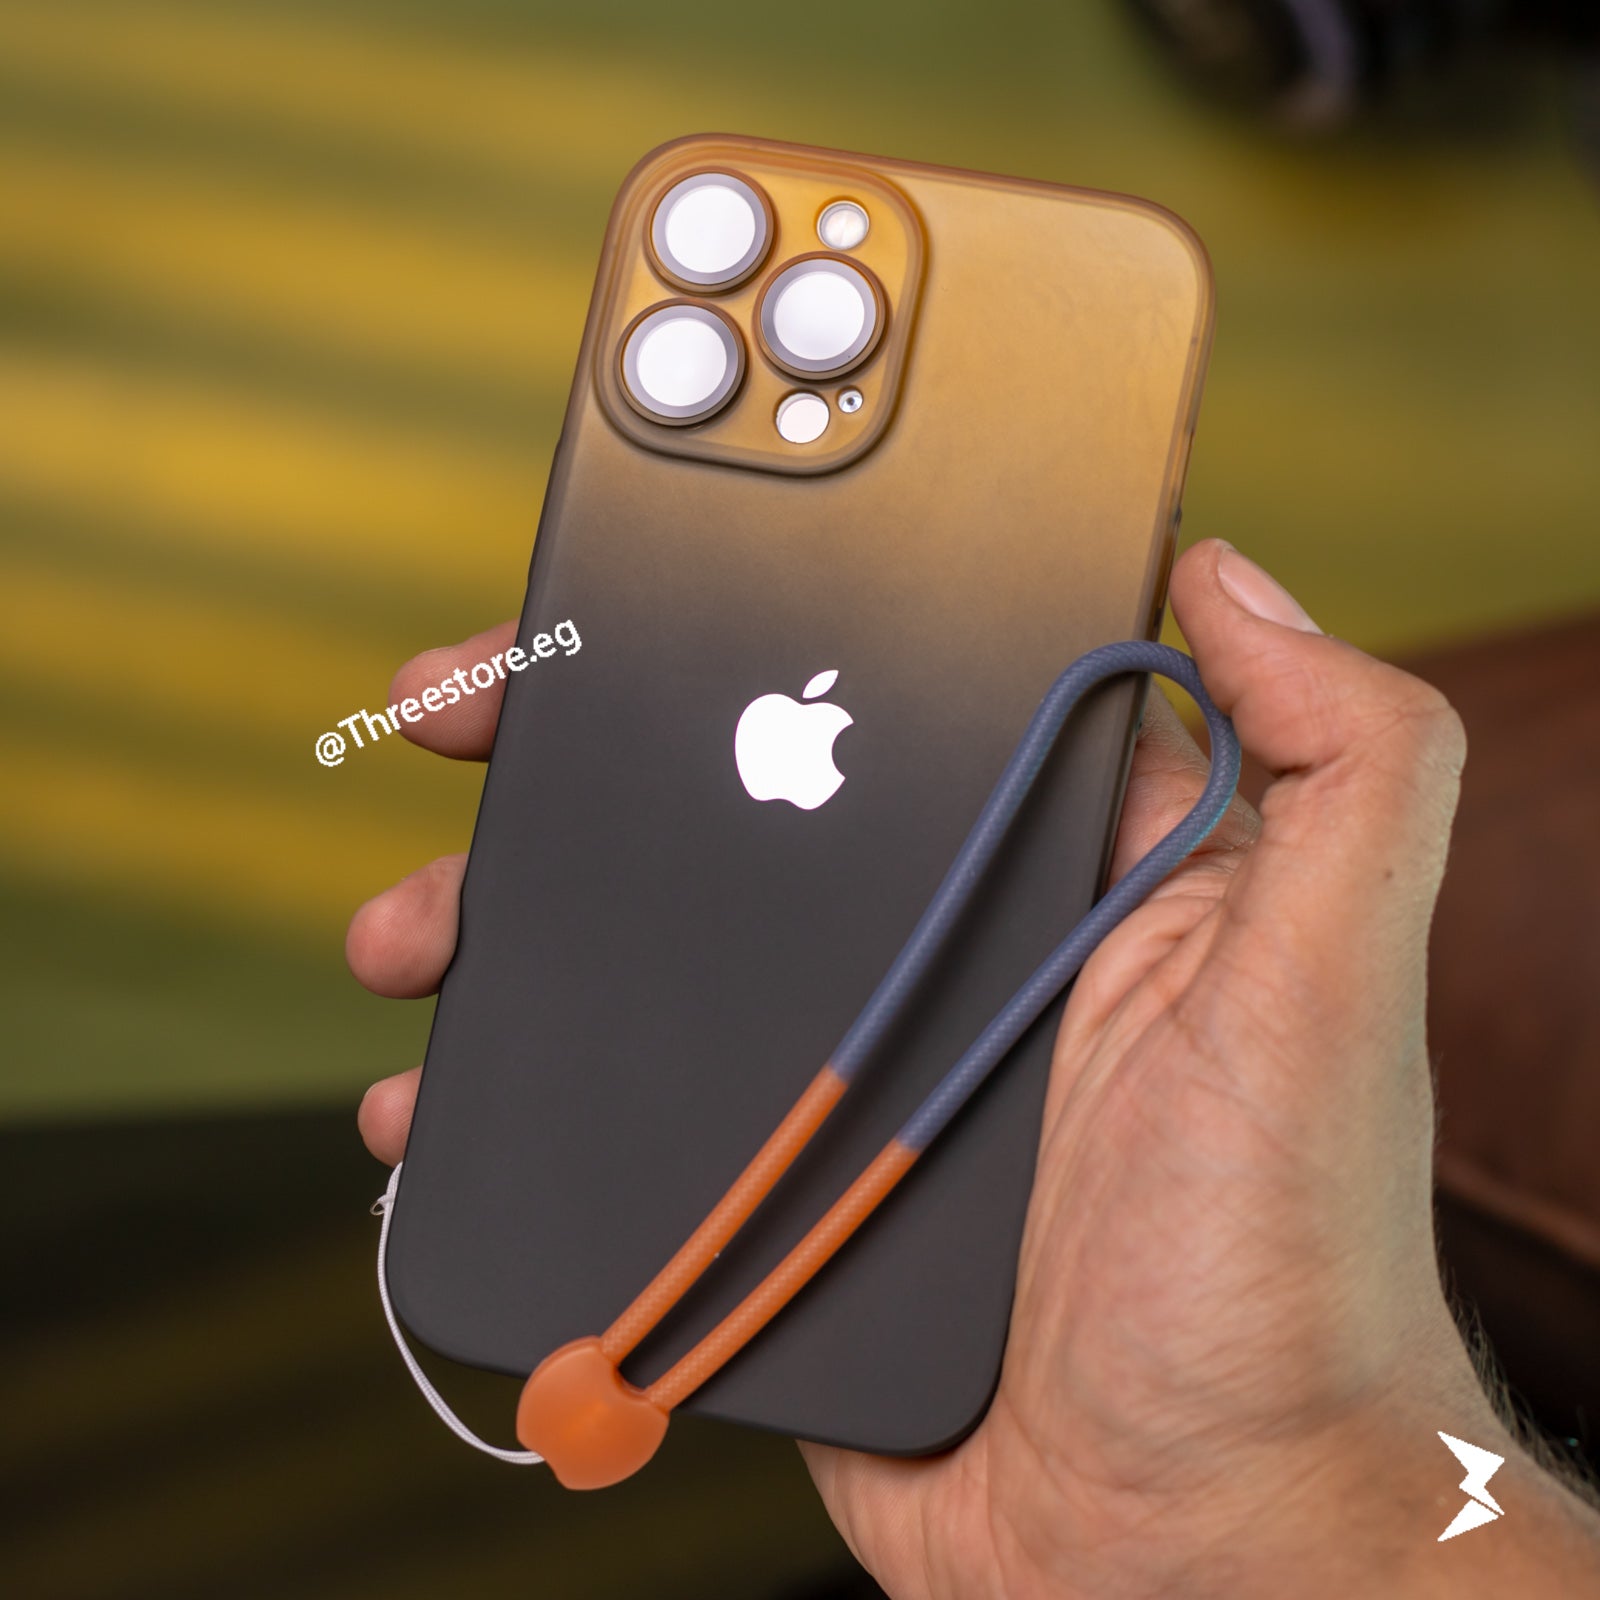 Gradient Color Case iPhone 11 Pro Max